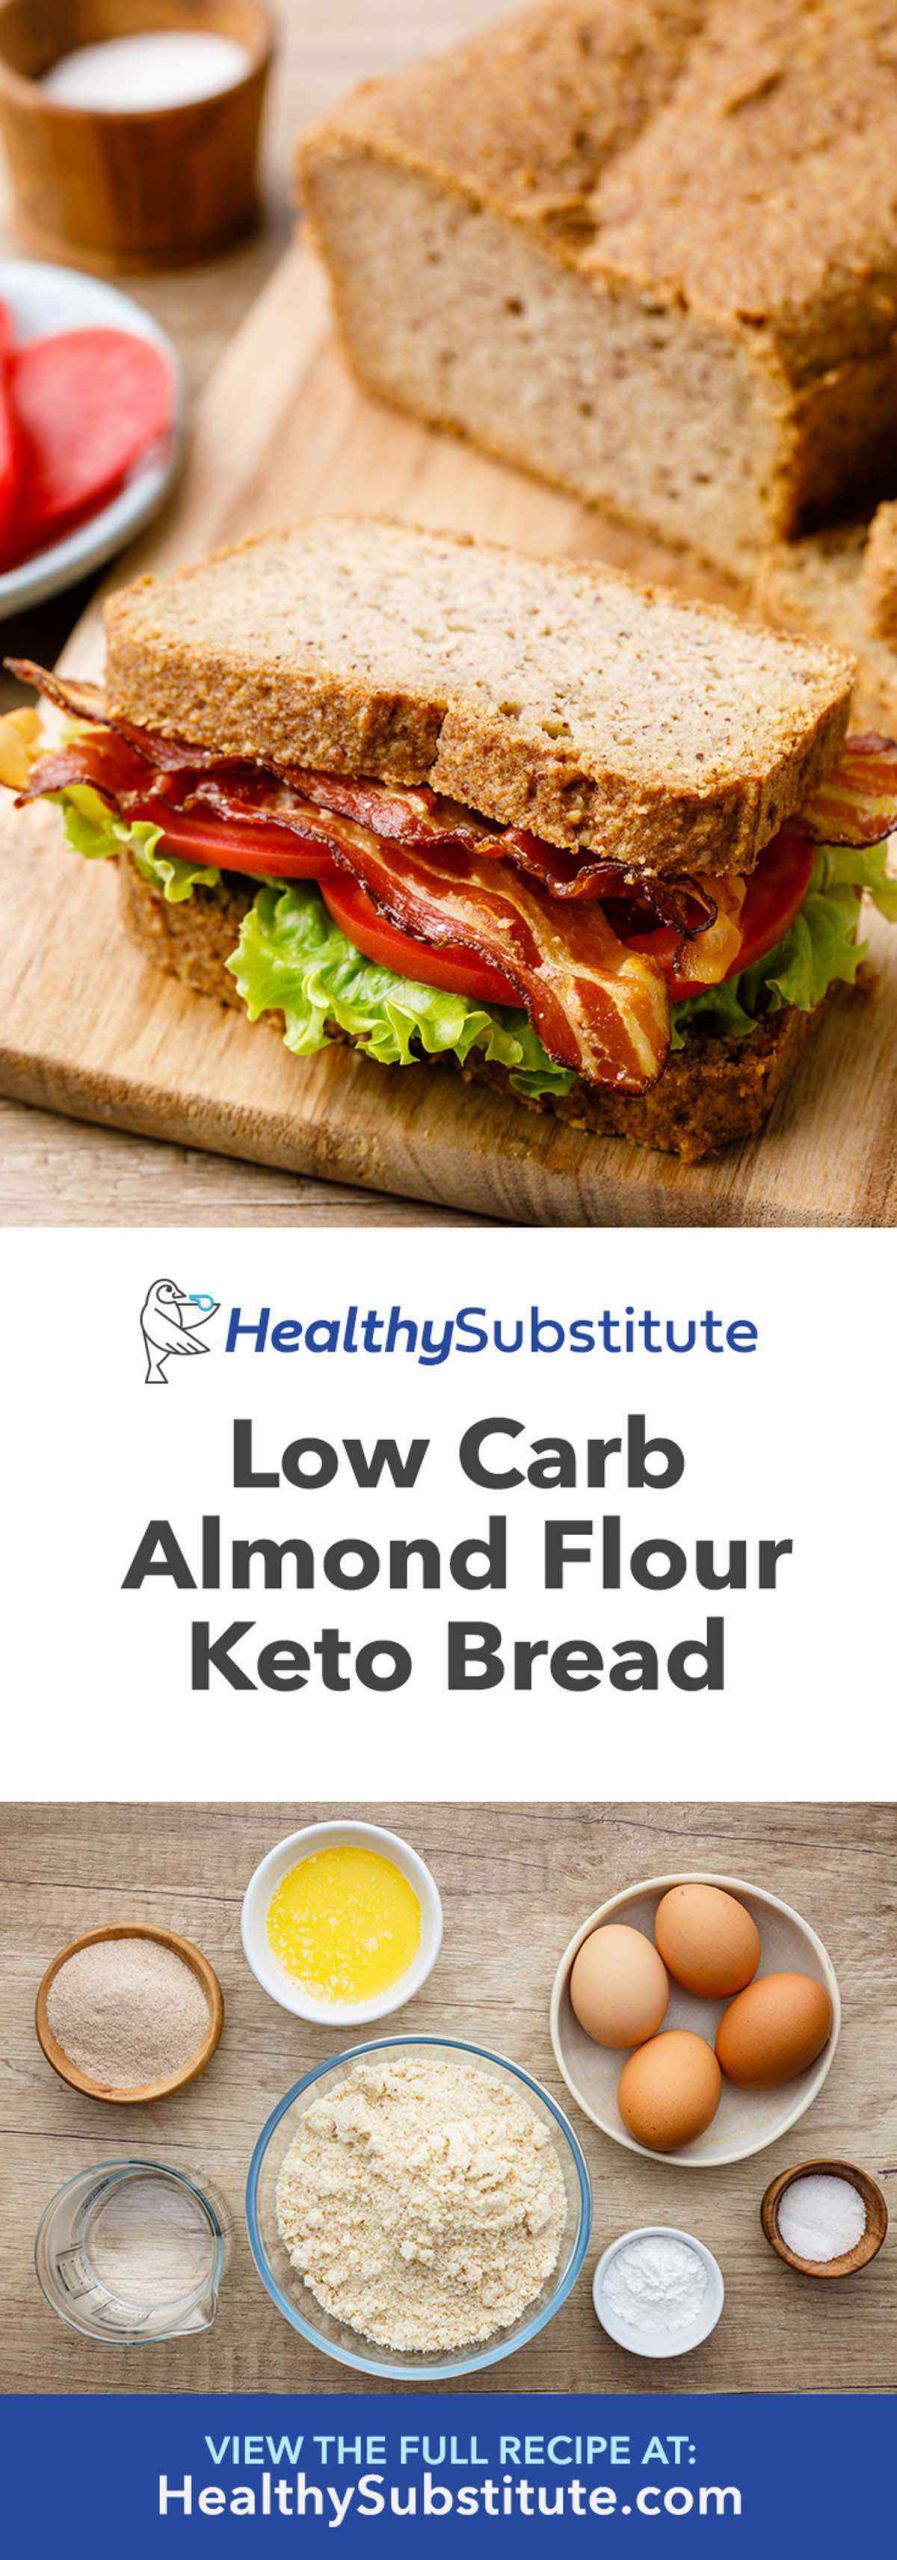 Keto Bread Almond Flour Low Carb
 Life changing Almond Flour Bread Recipe Keto Friendly